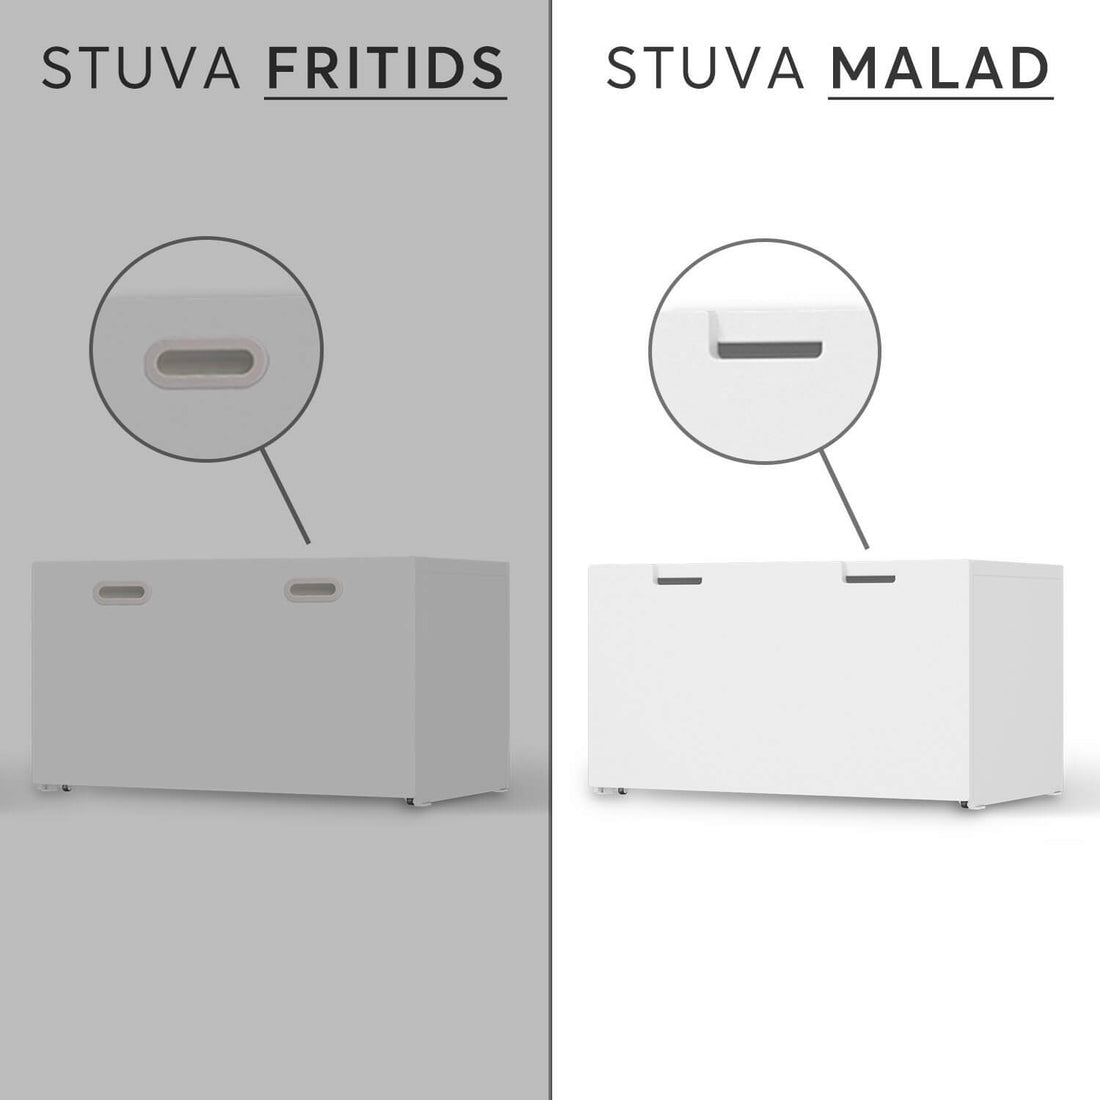 Vergleich IKEA Stuva Malad / Fritids - Savanne